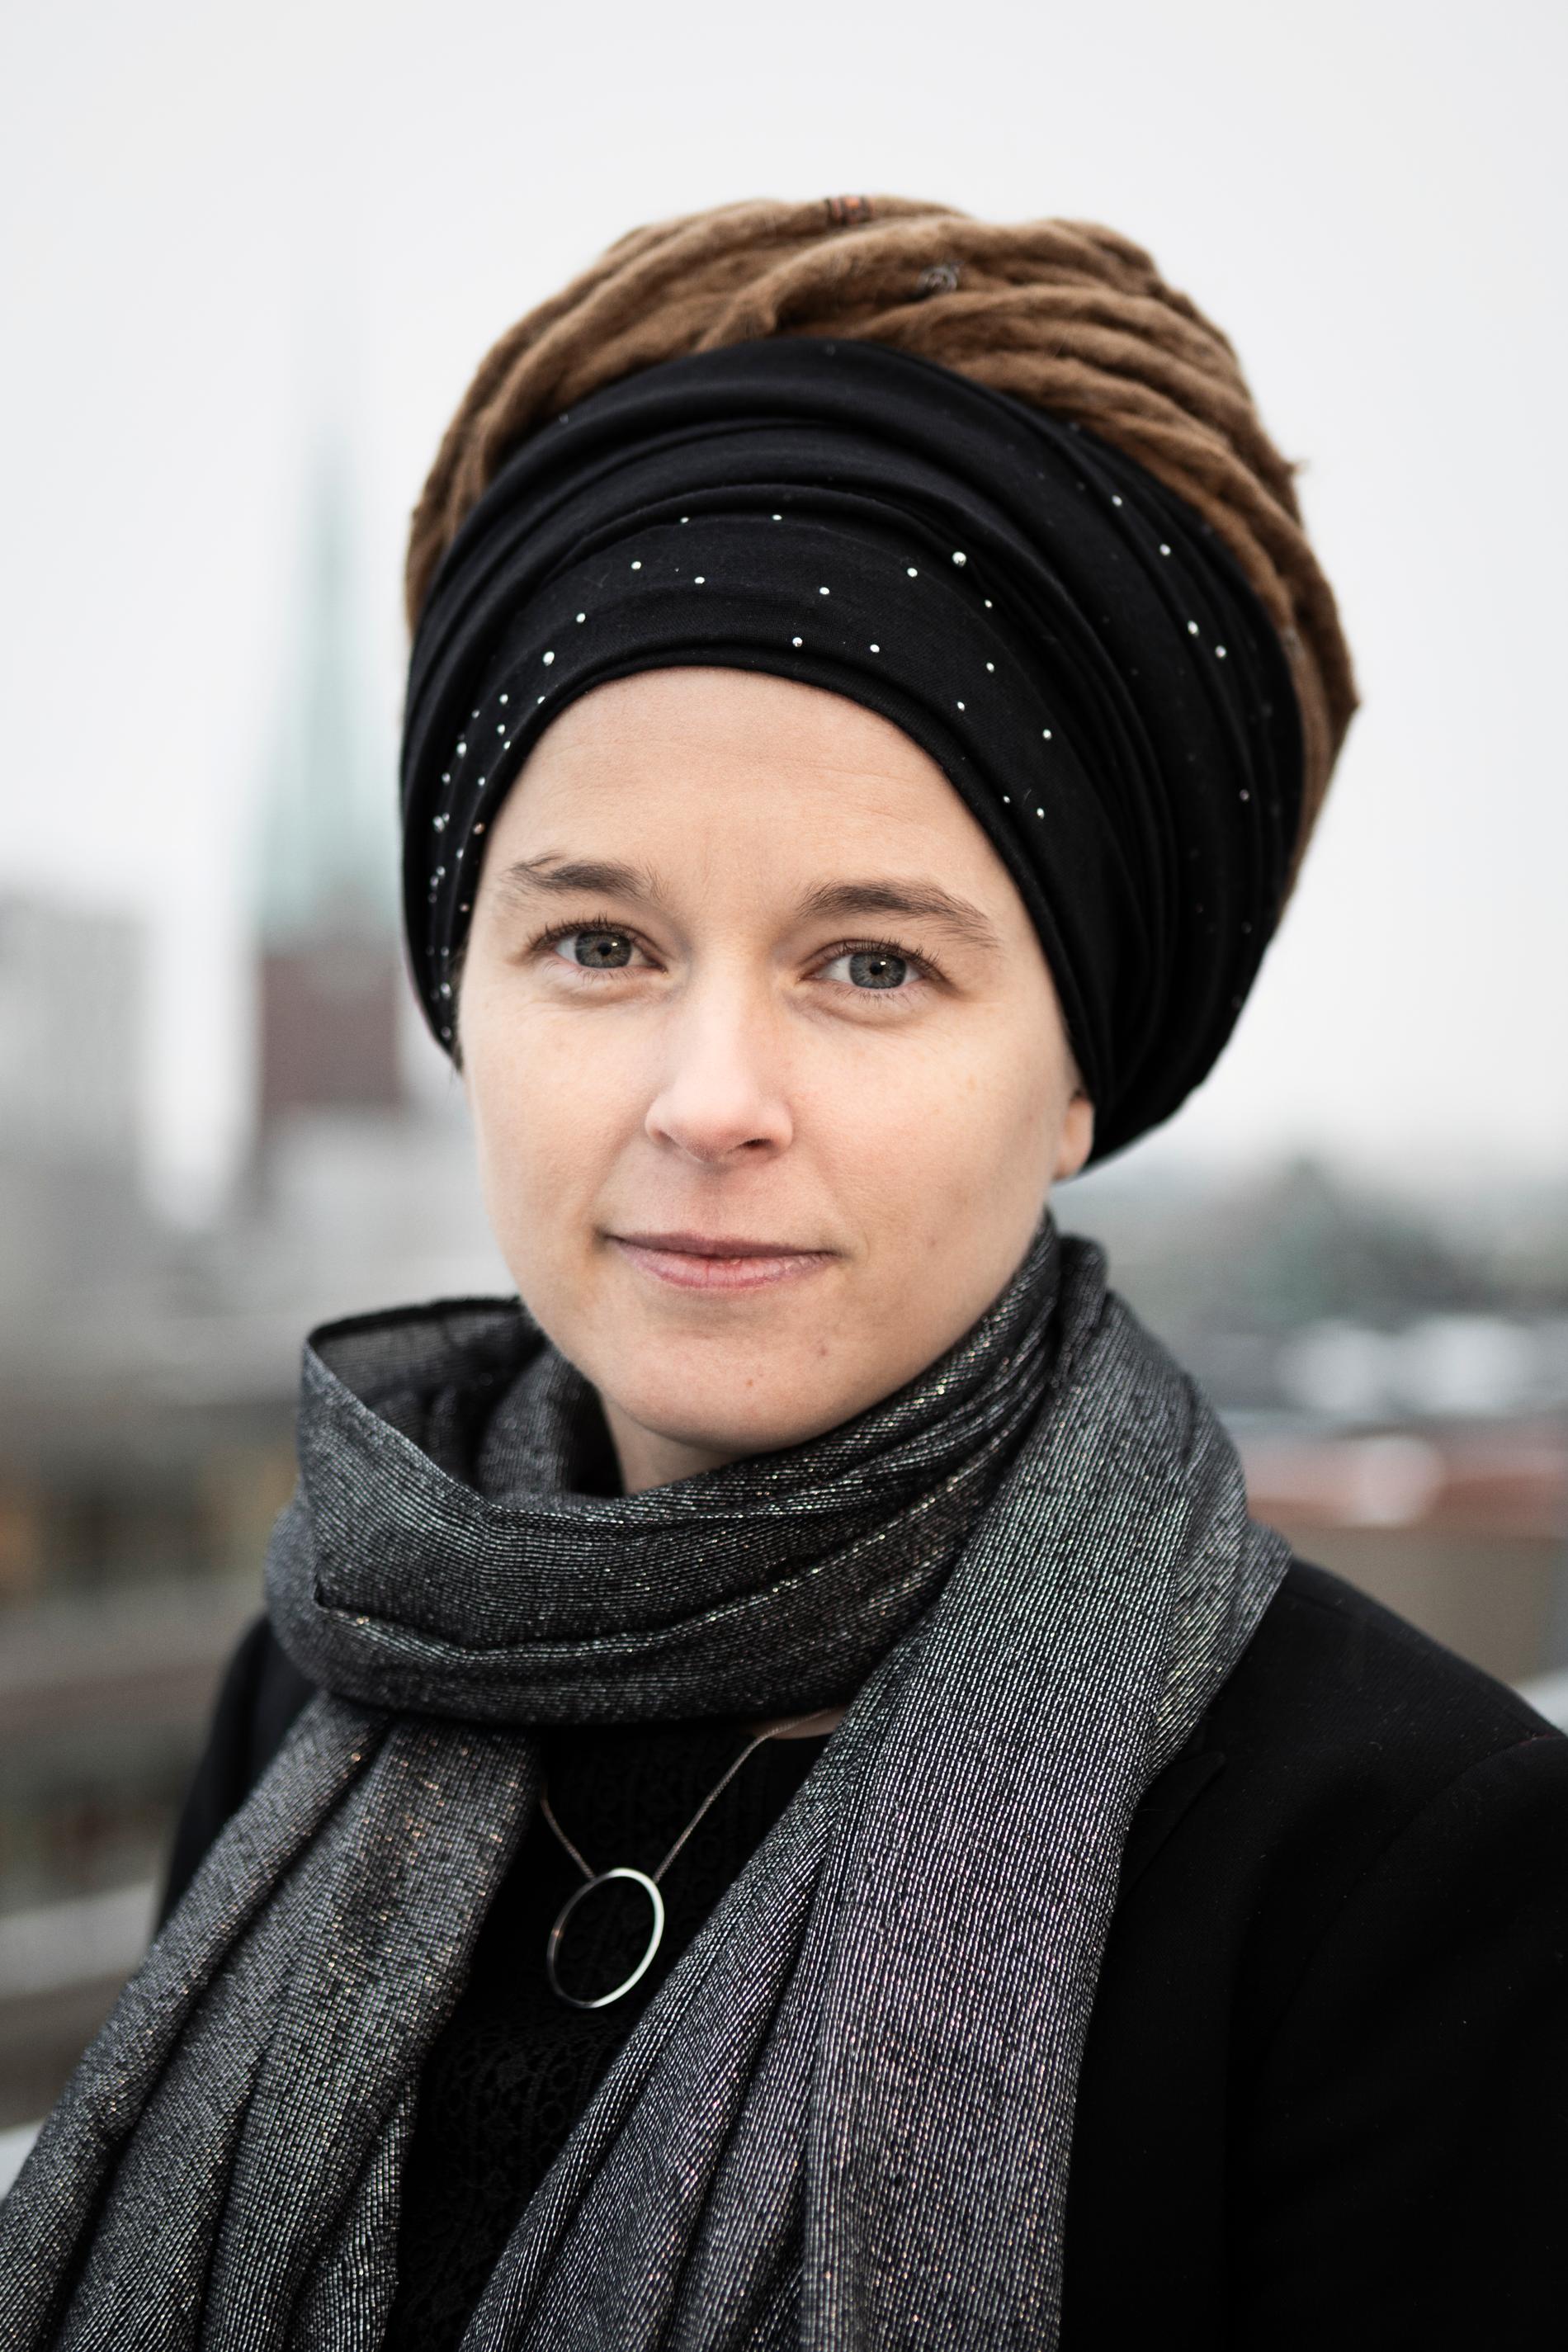 Sveriges kulturminister Amanda Lind.